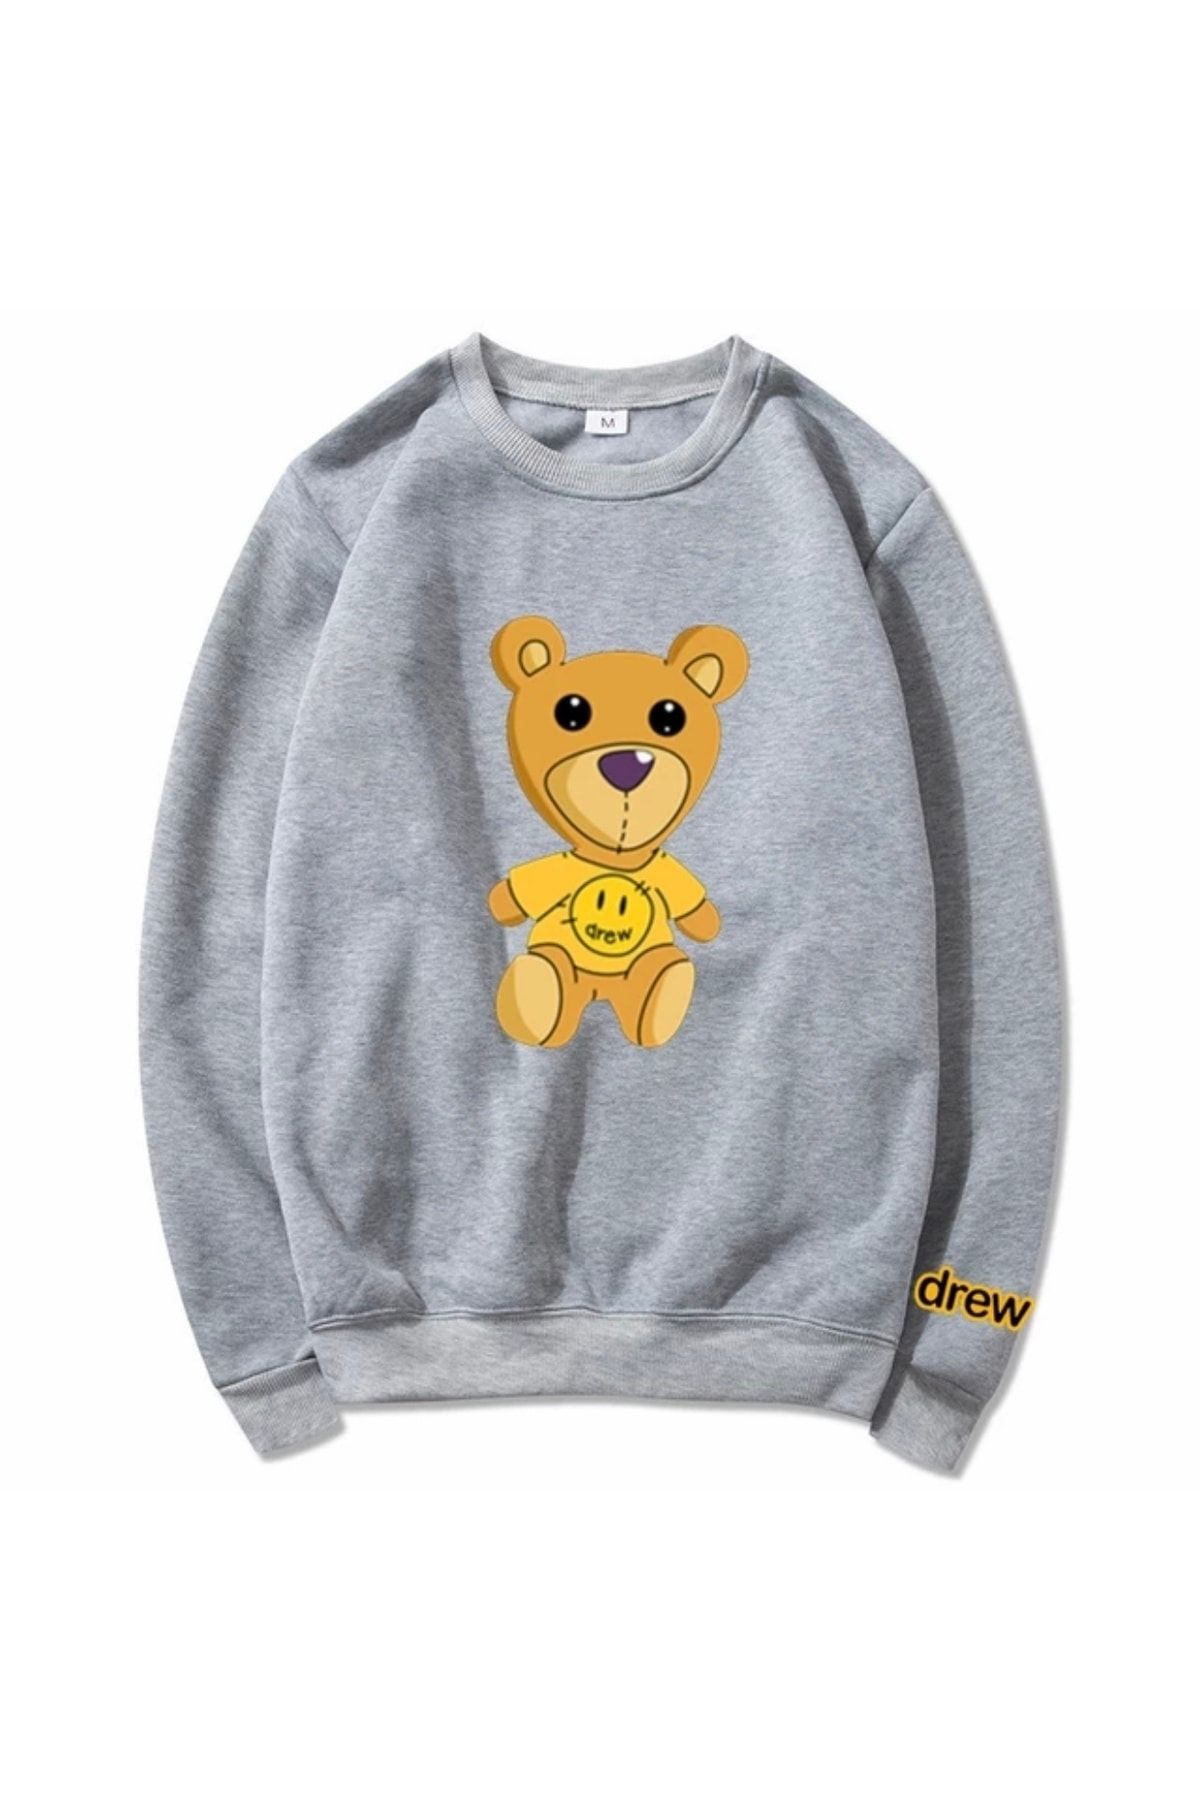 Teddy Bear Hoodies & Sweatshirts, Unique Designs